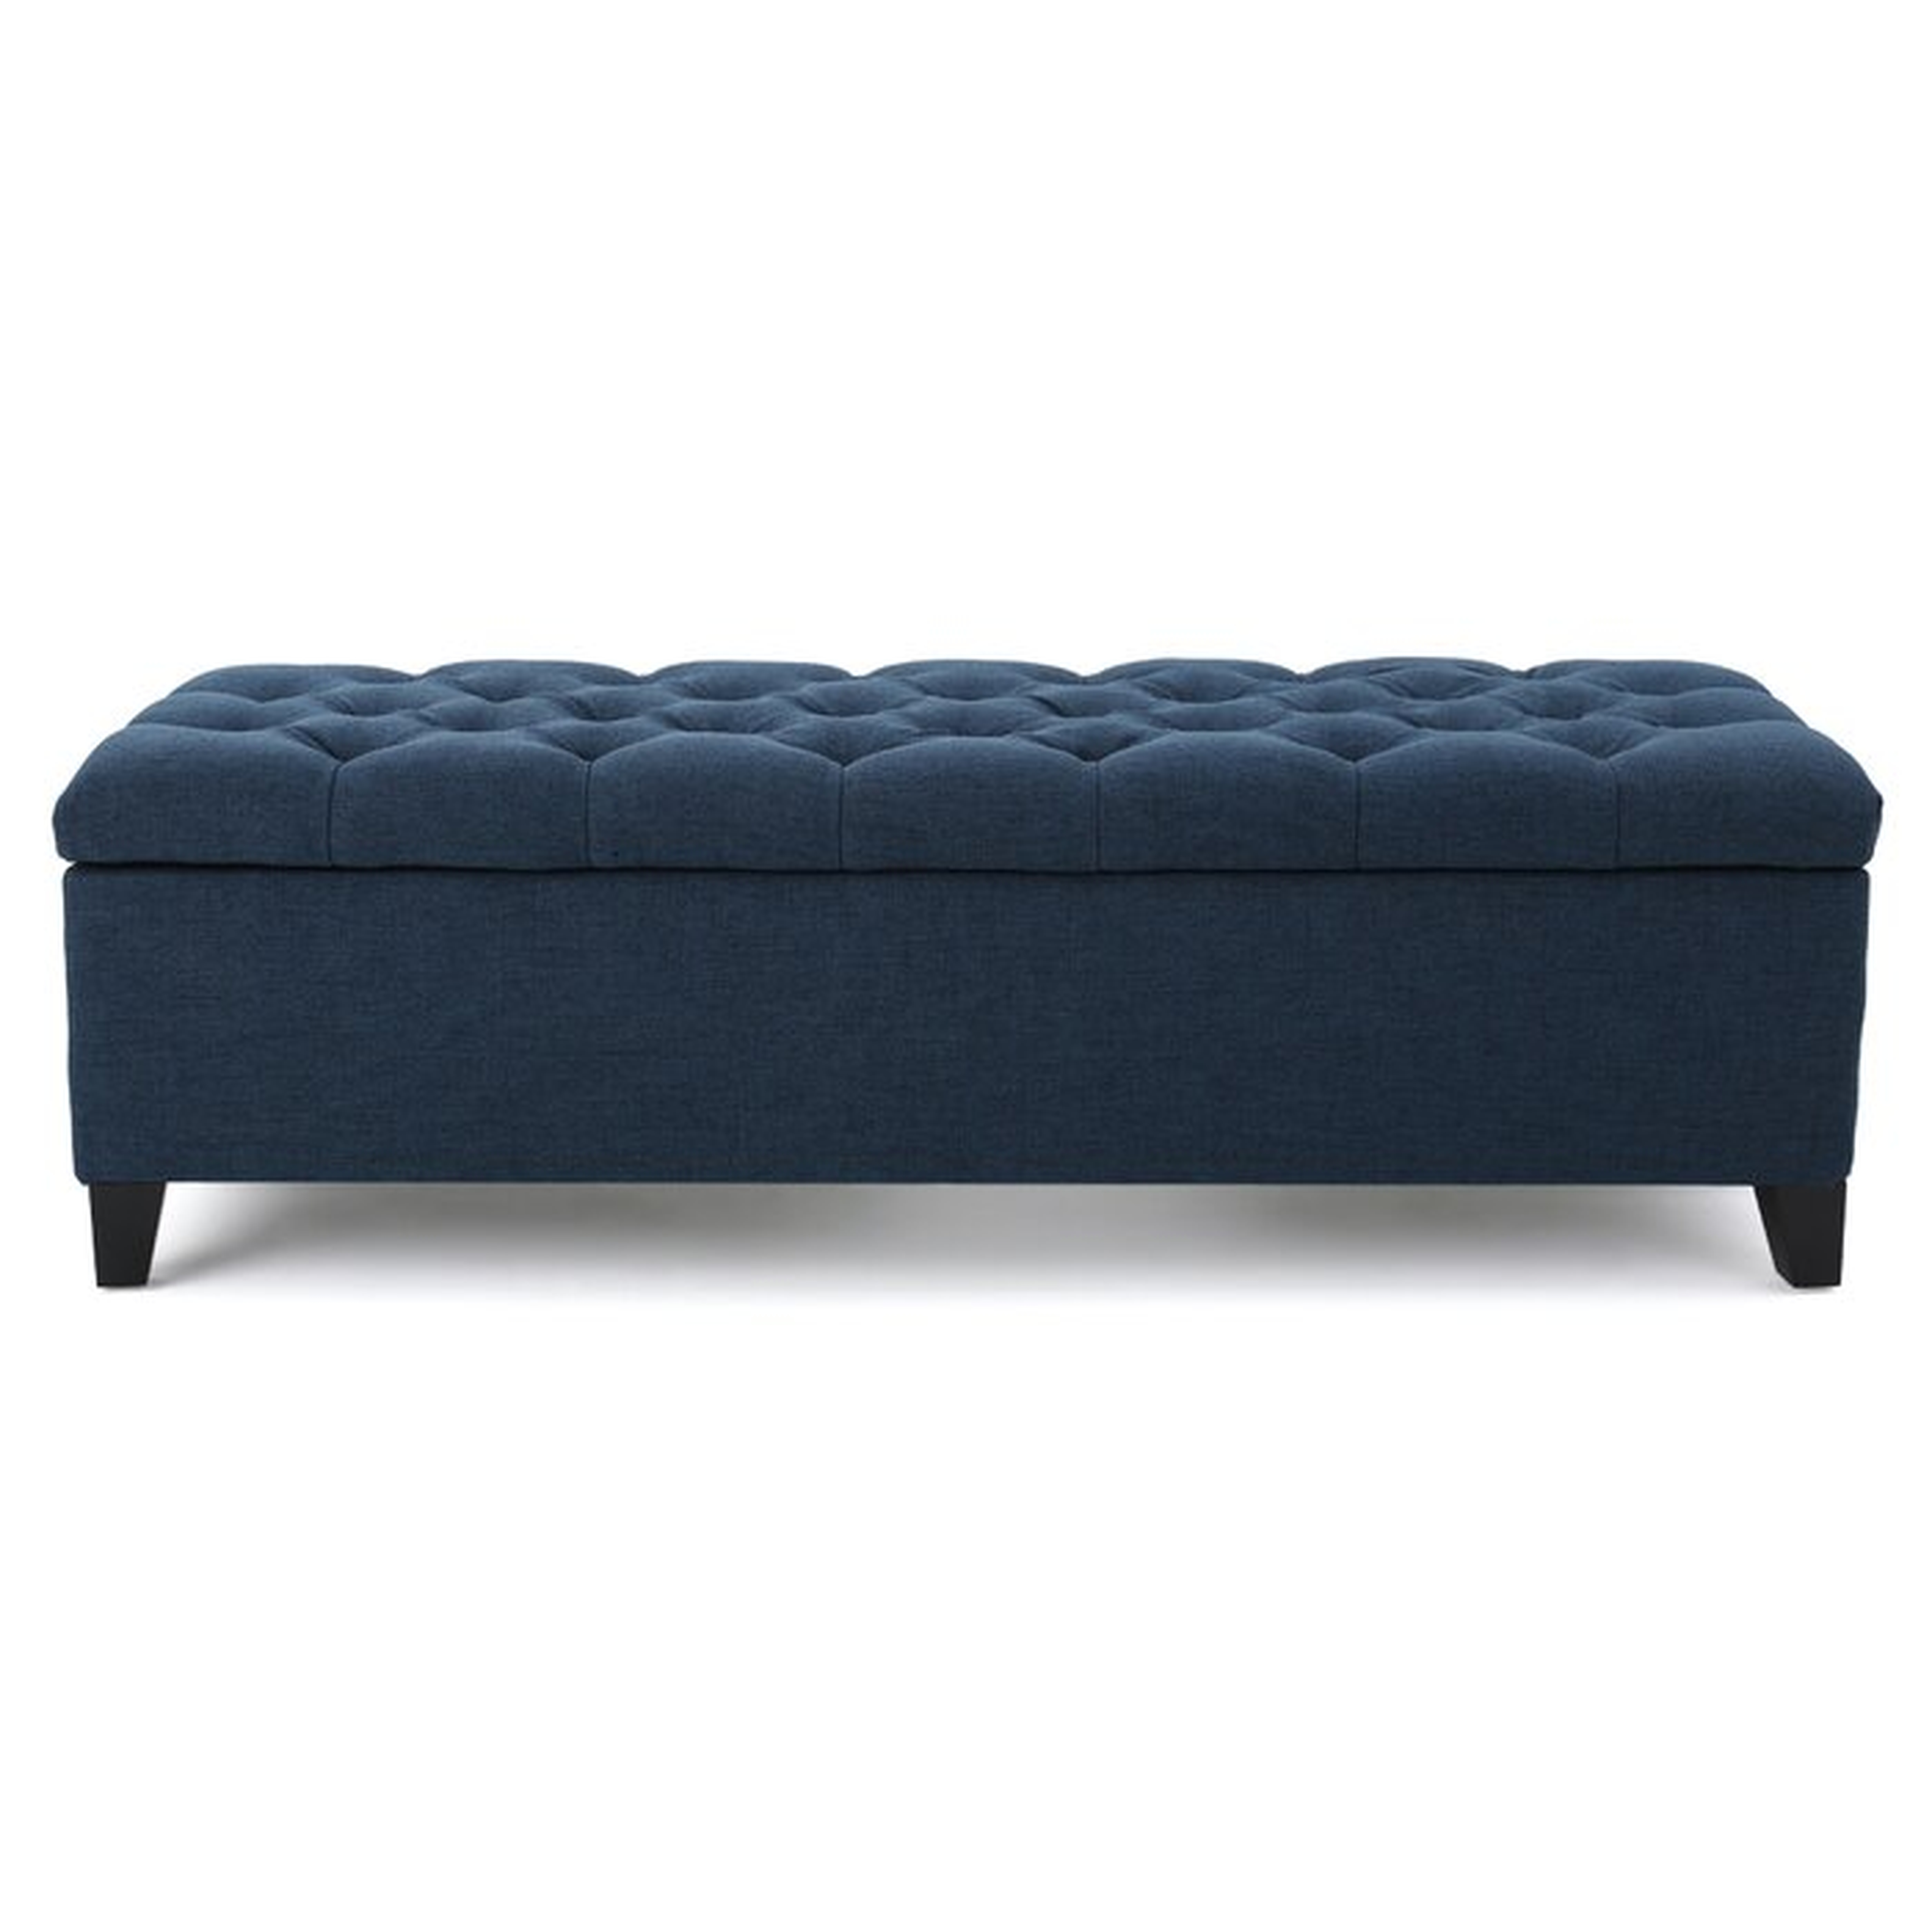 Amalfi Upholstered Flip top Storage Bench - Wayfair